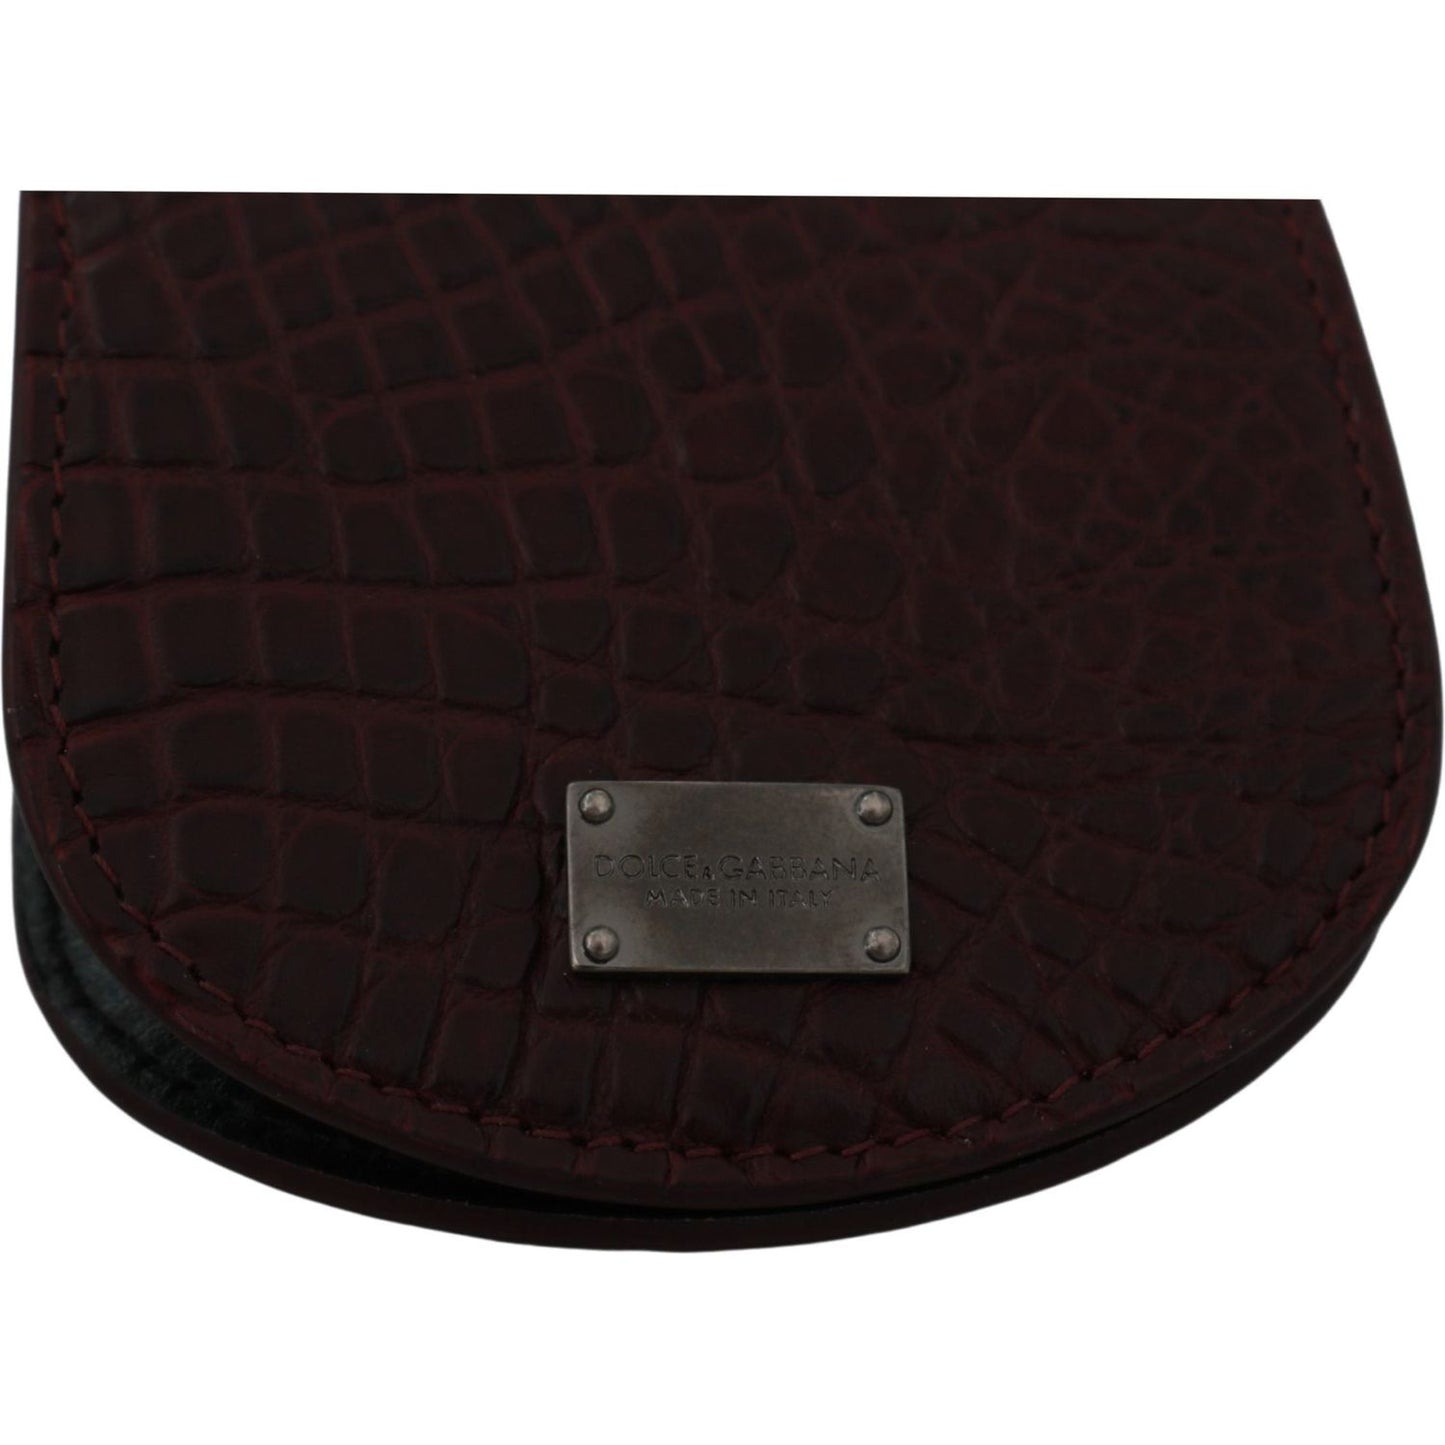 Dolce & Gabbana Refined Caimano Leather Coin Case brown-exotic-skin-pocket-condom-case-holder Condom Case IMG_0259-scaled-d0e6da00-403.jpg